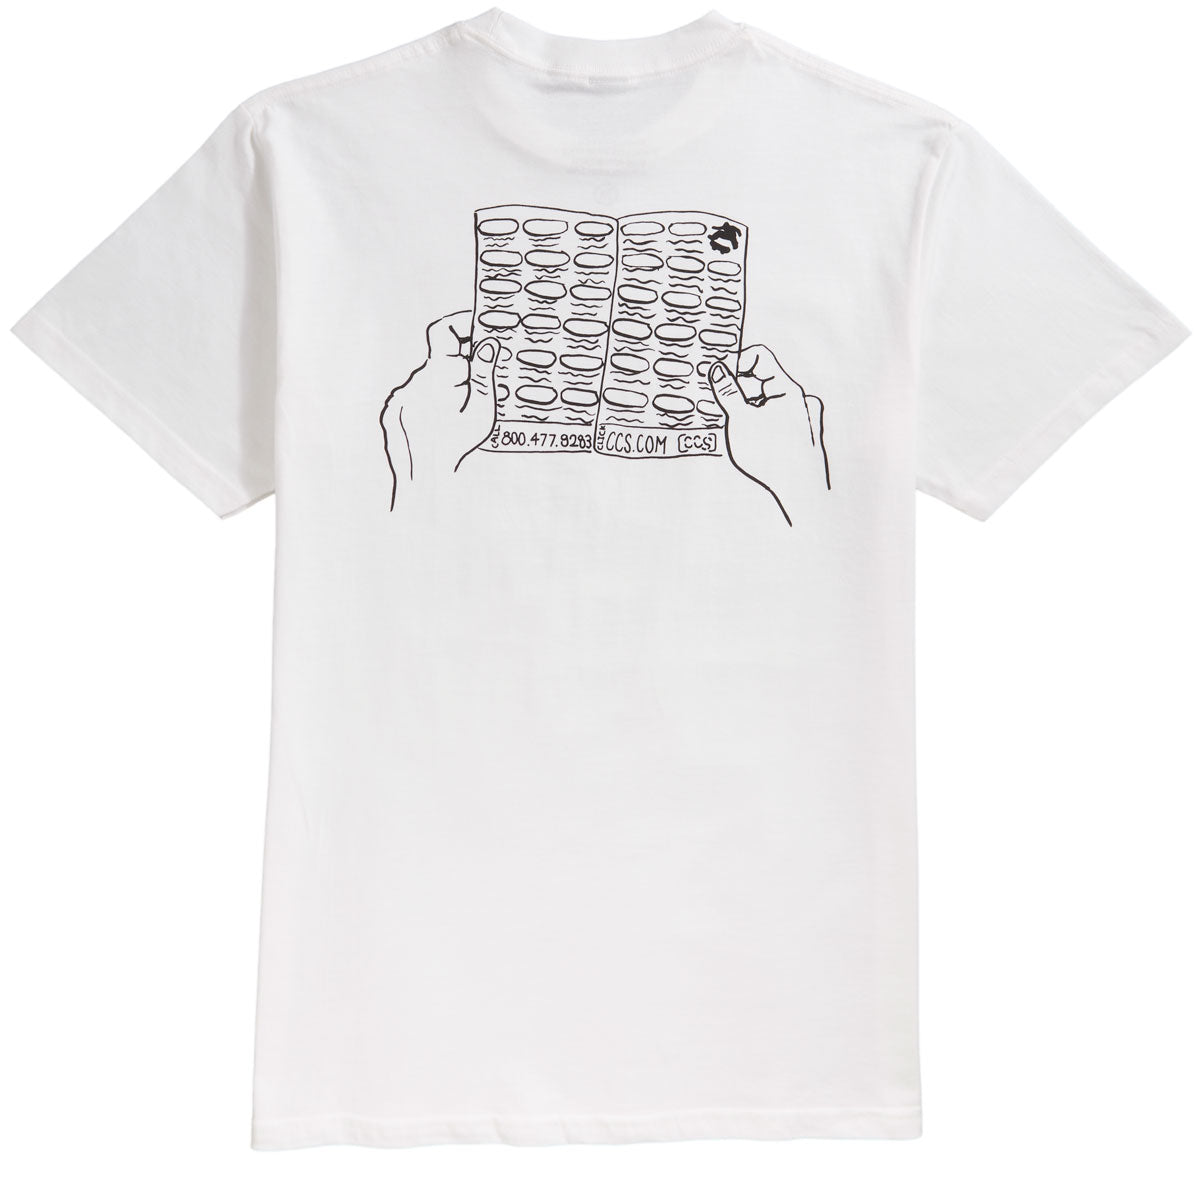 CCS Catalog Sketch T-Shirt - White/Black image 2